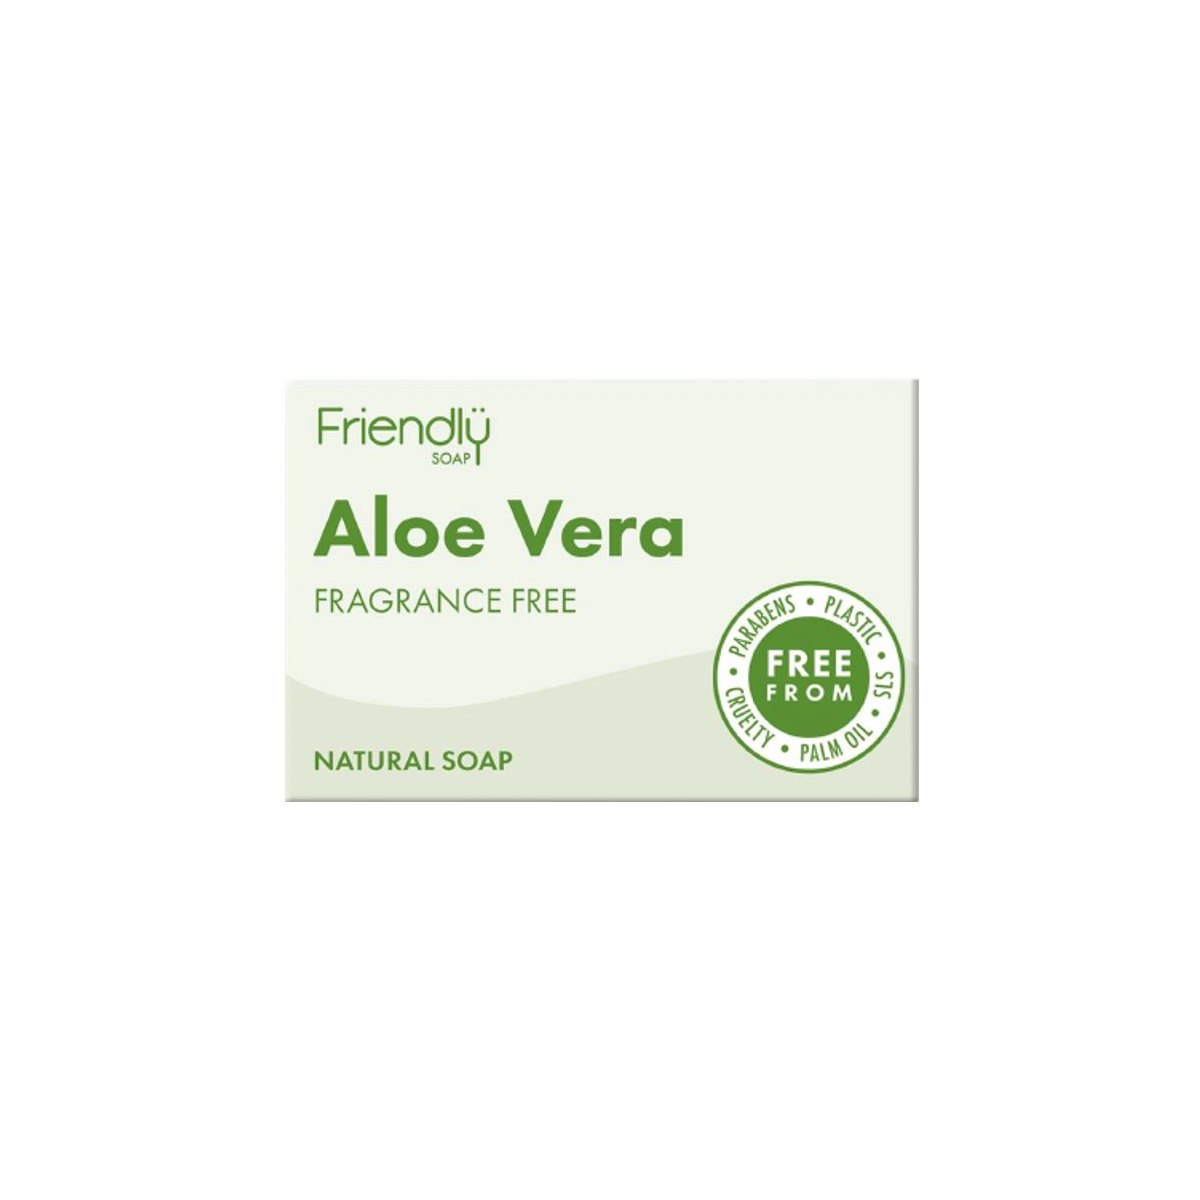 Friendly Soap Aloe Vera Fragrance Free - Natural Soap 95g